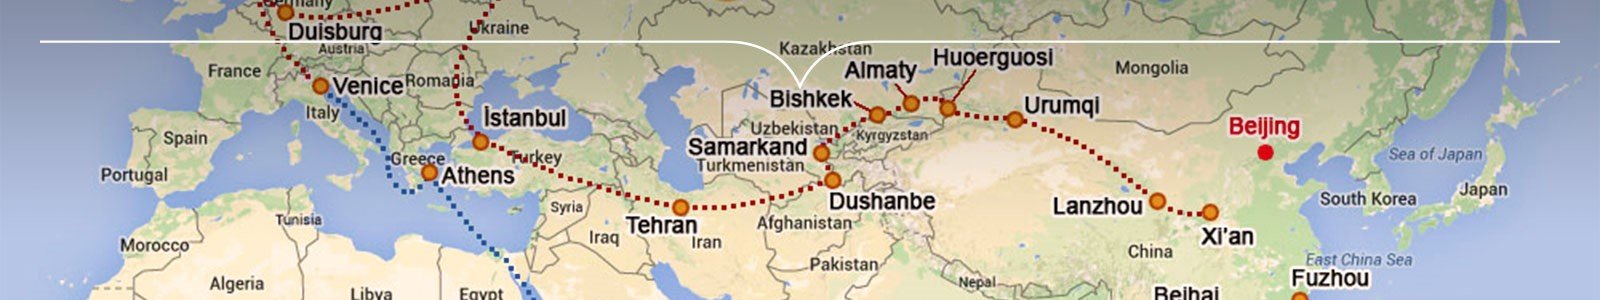 CFGC website header The new Silk Road.jpg